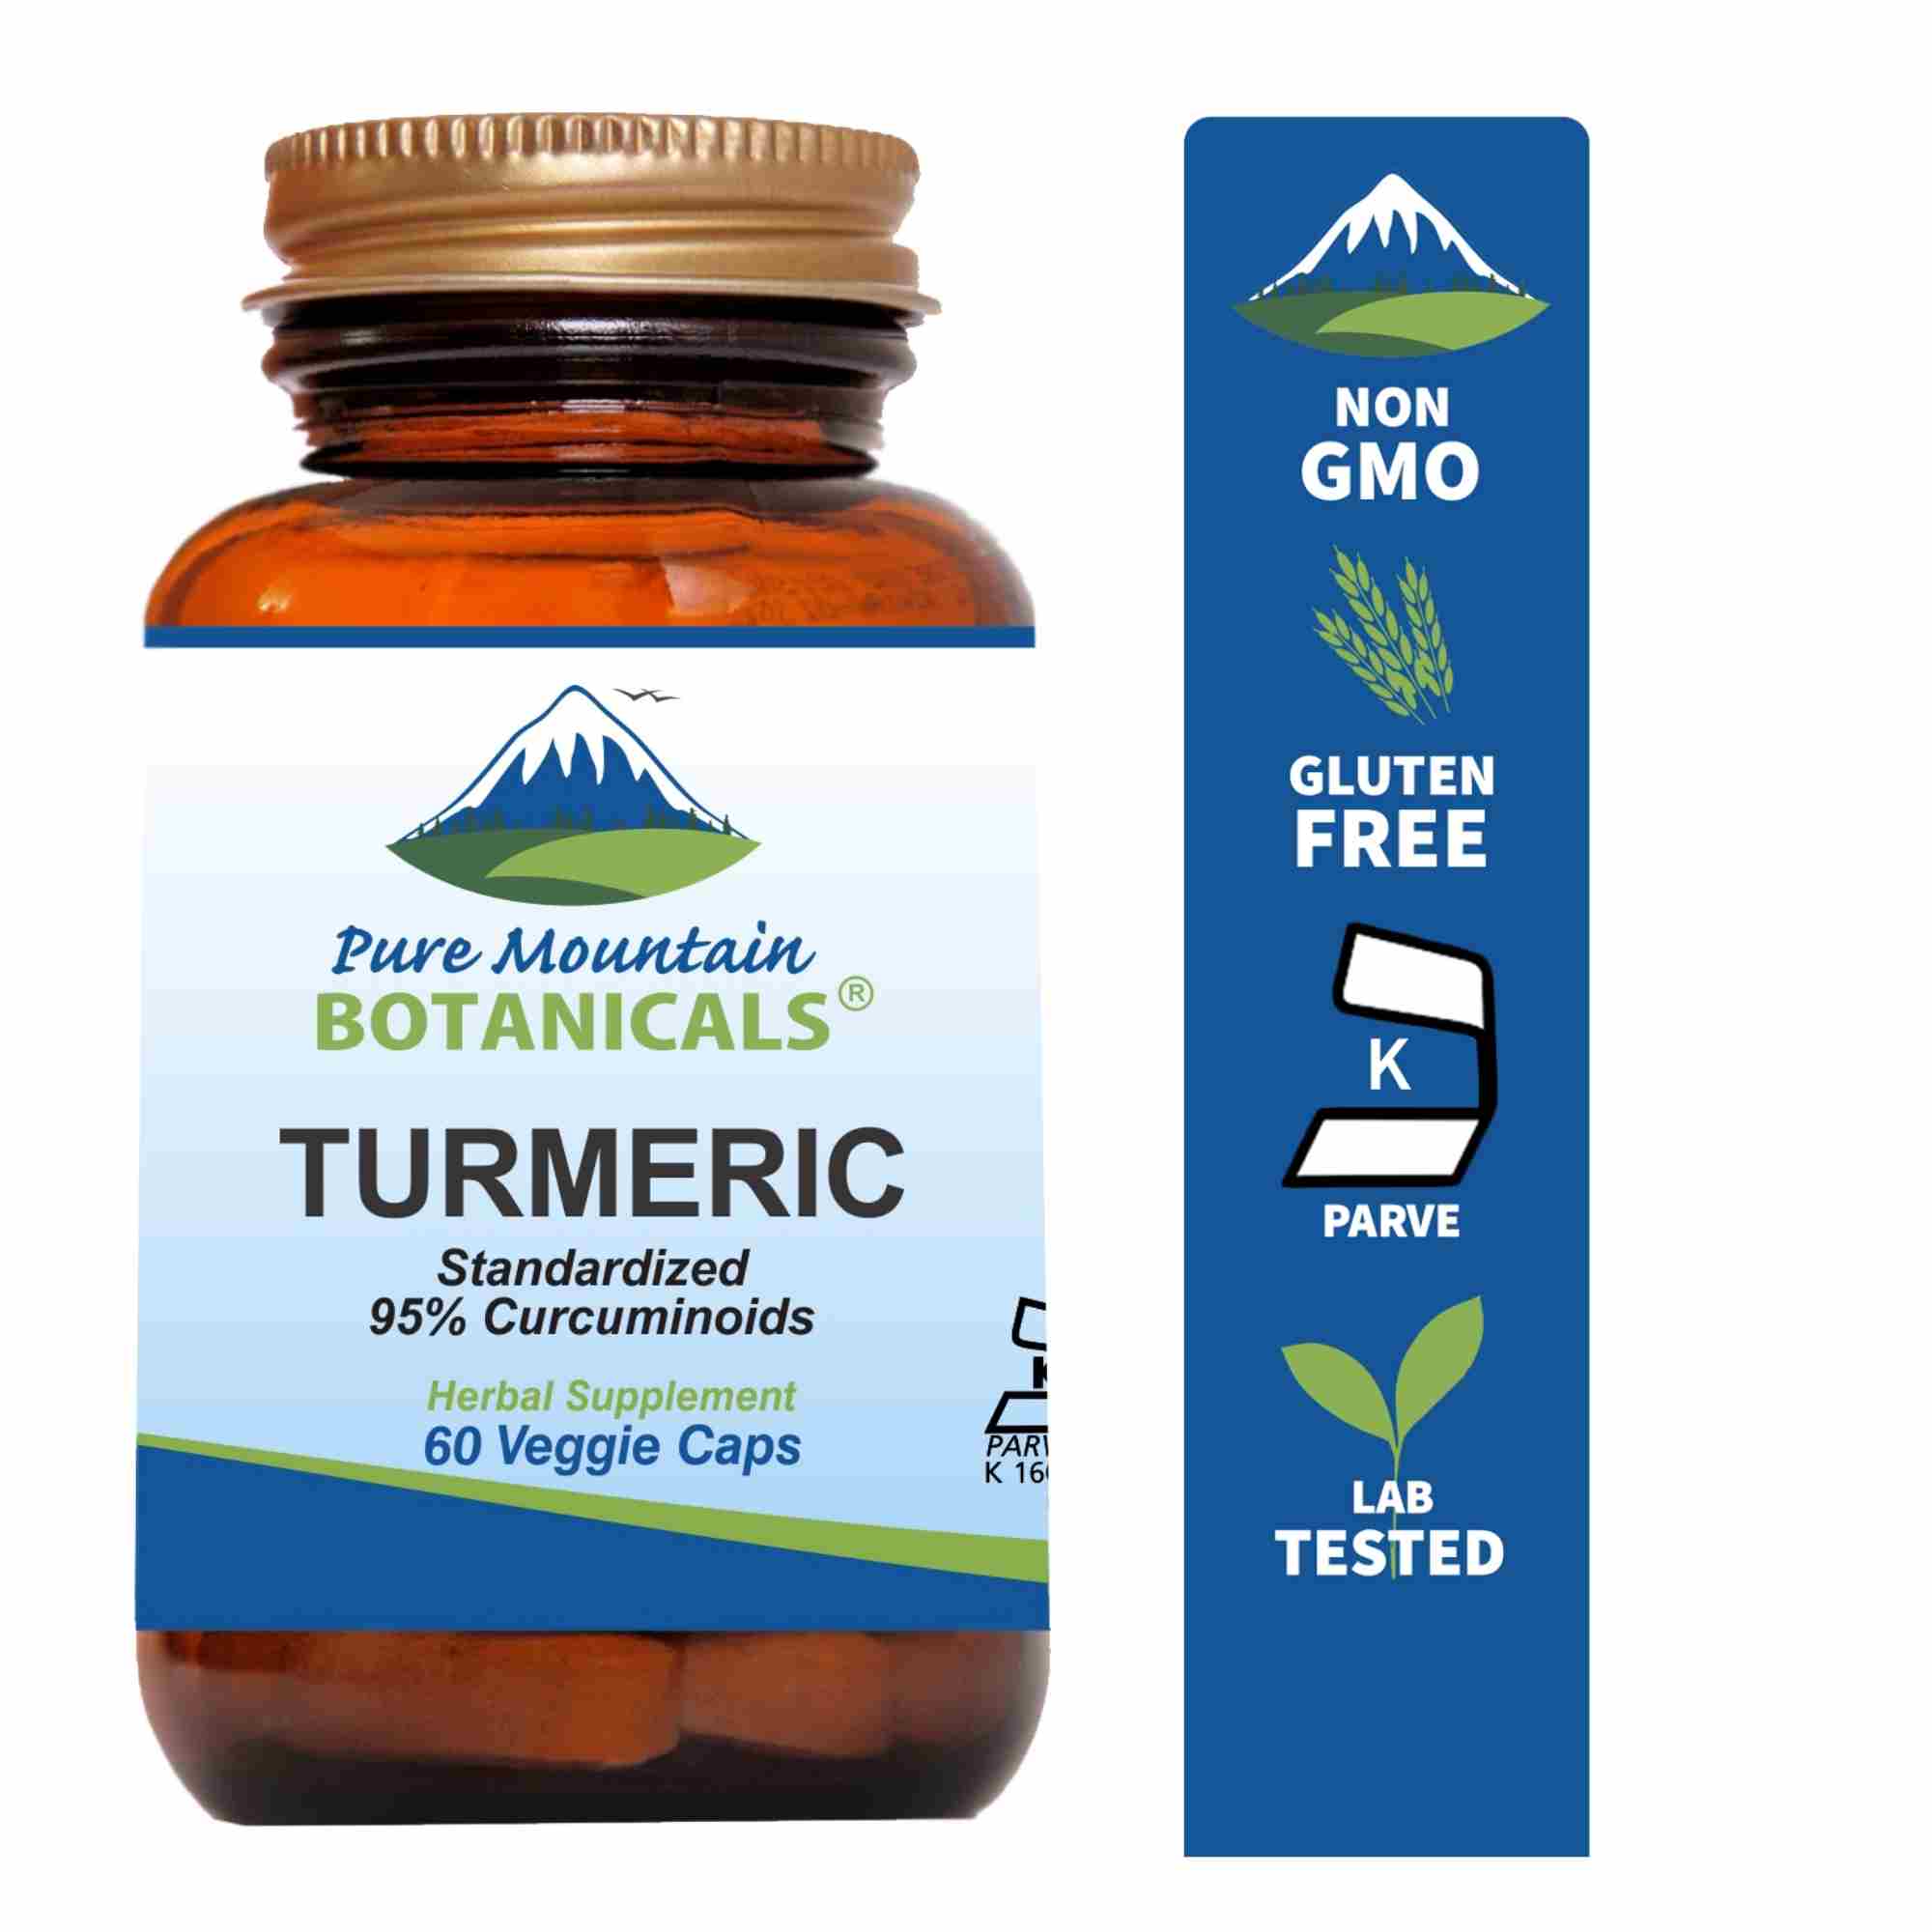 curcumin supplements contain piperine